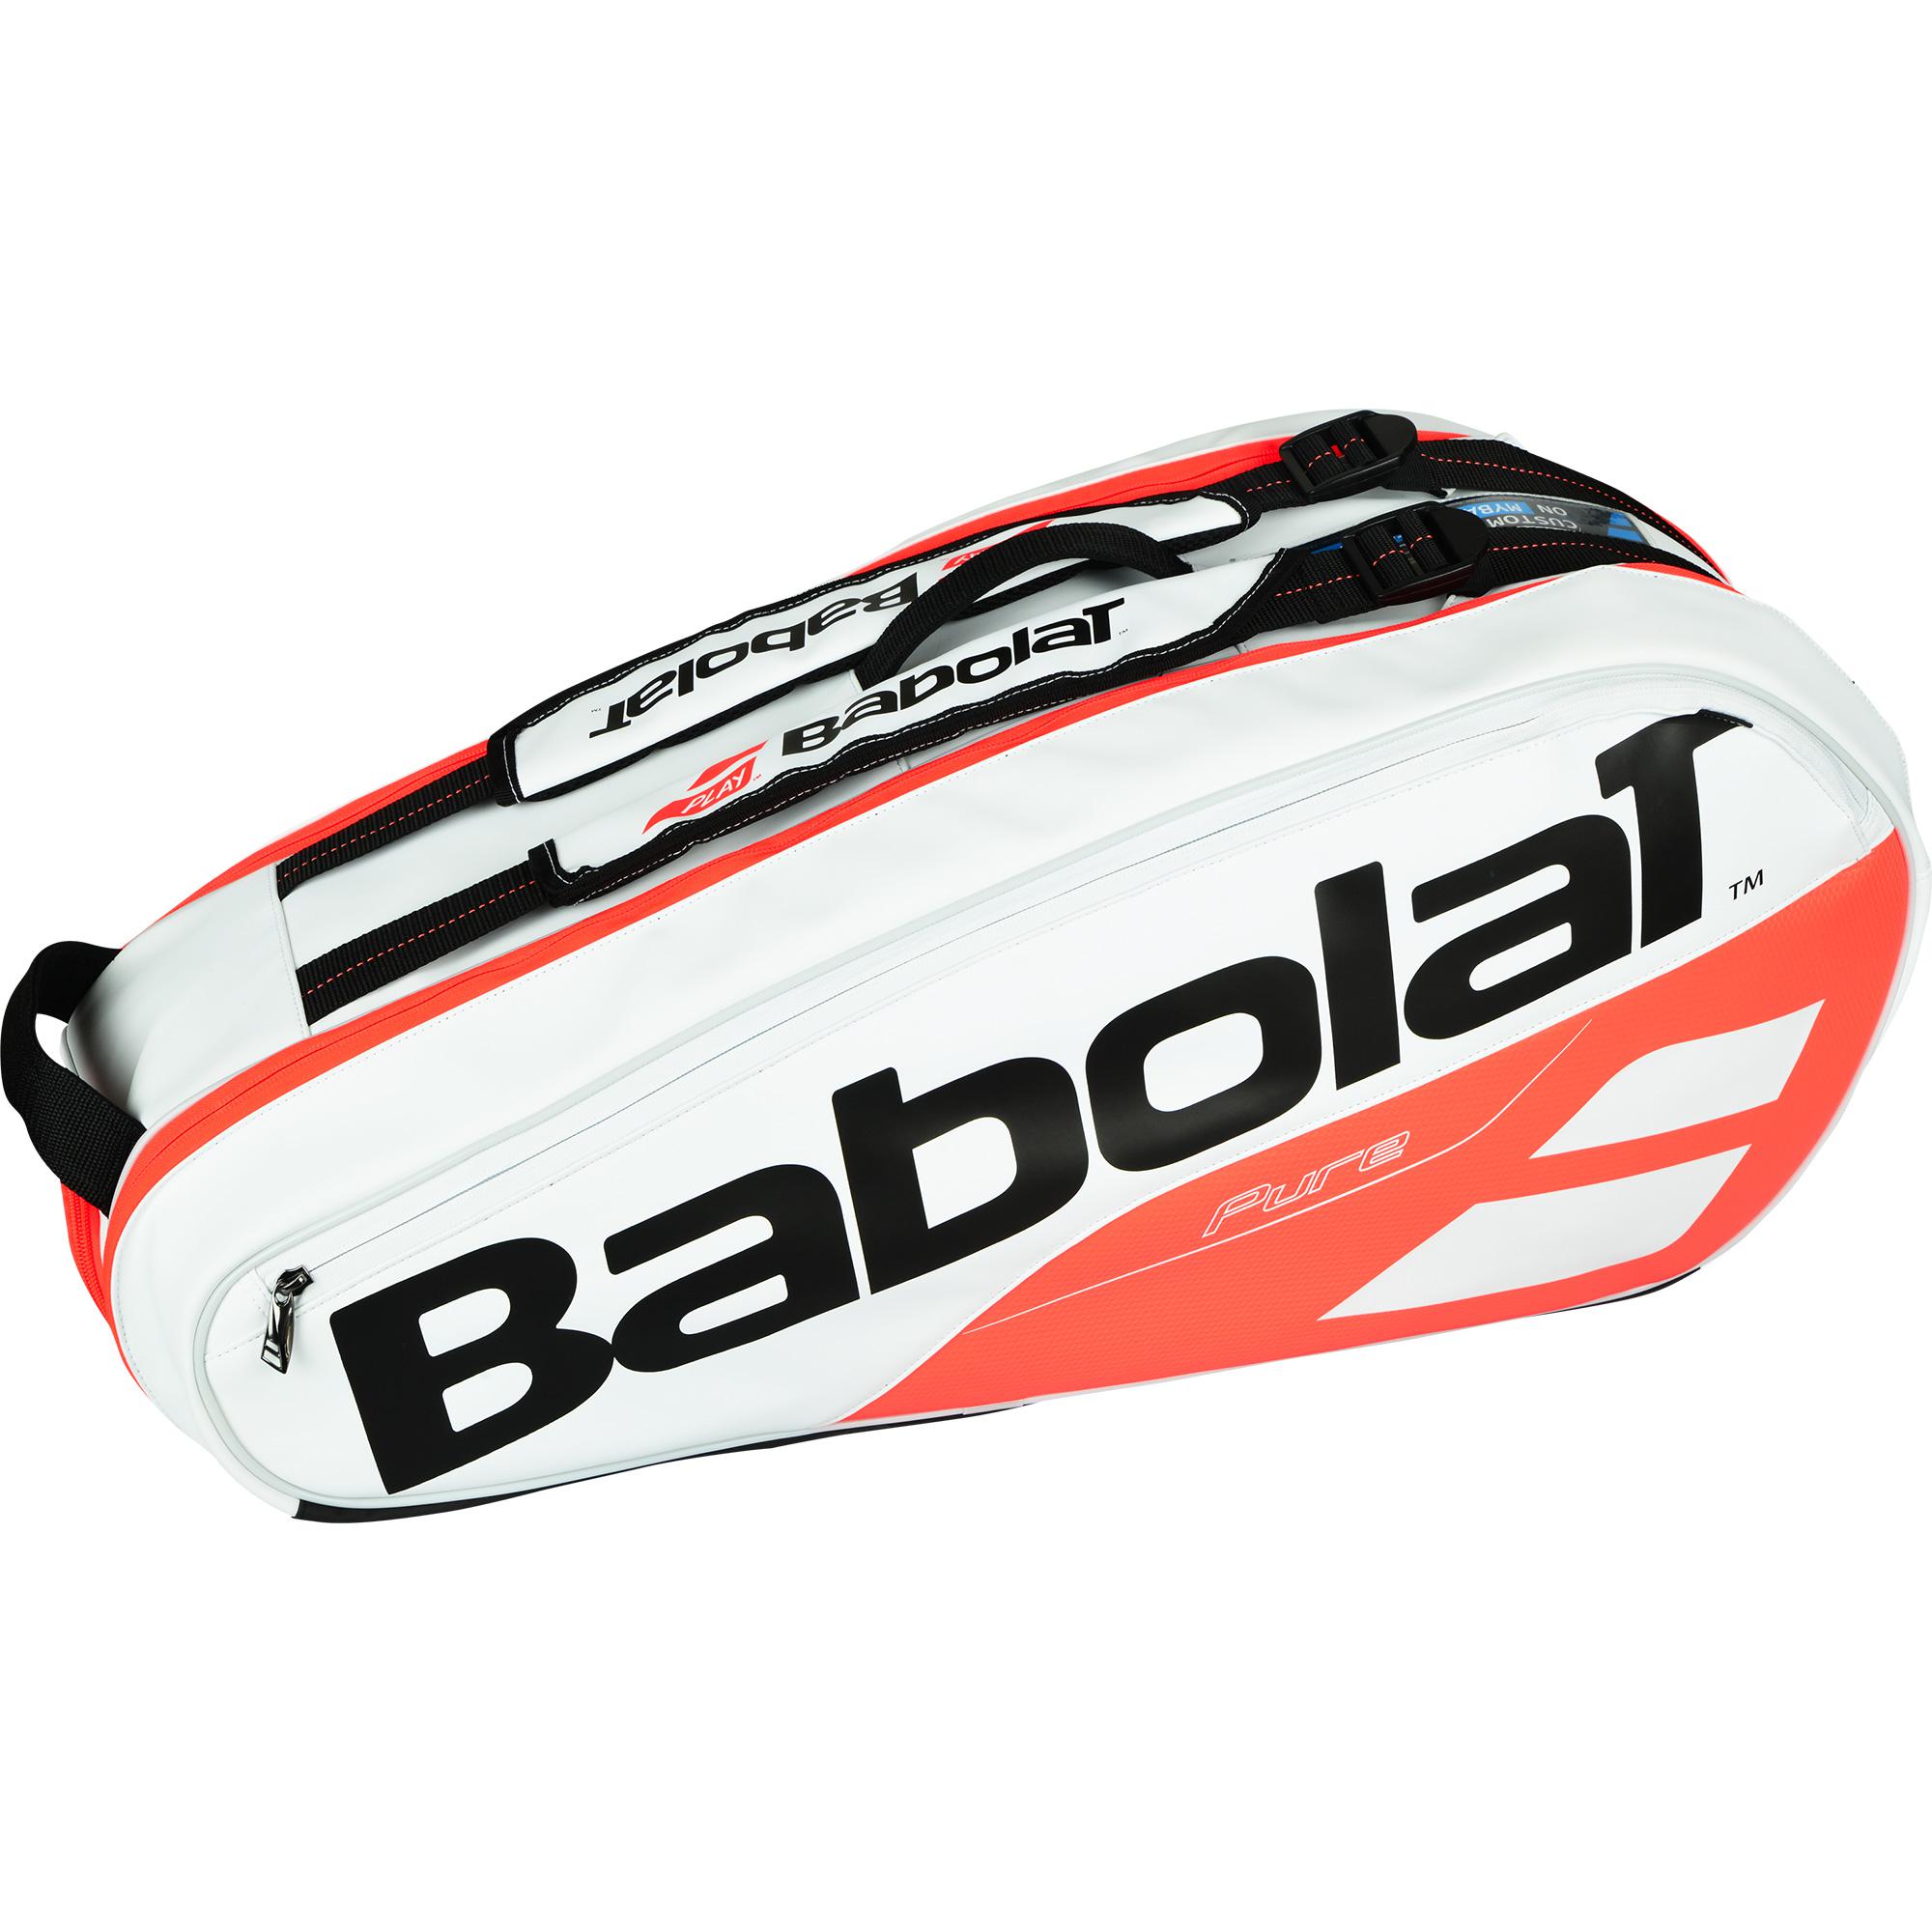 Babolat Pure Strike Duffle Tennis Bag